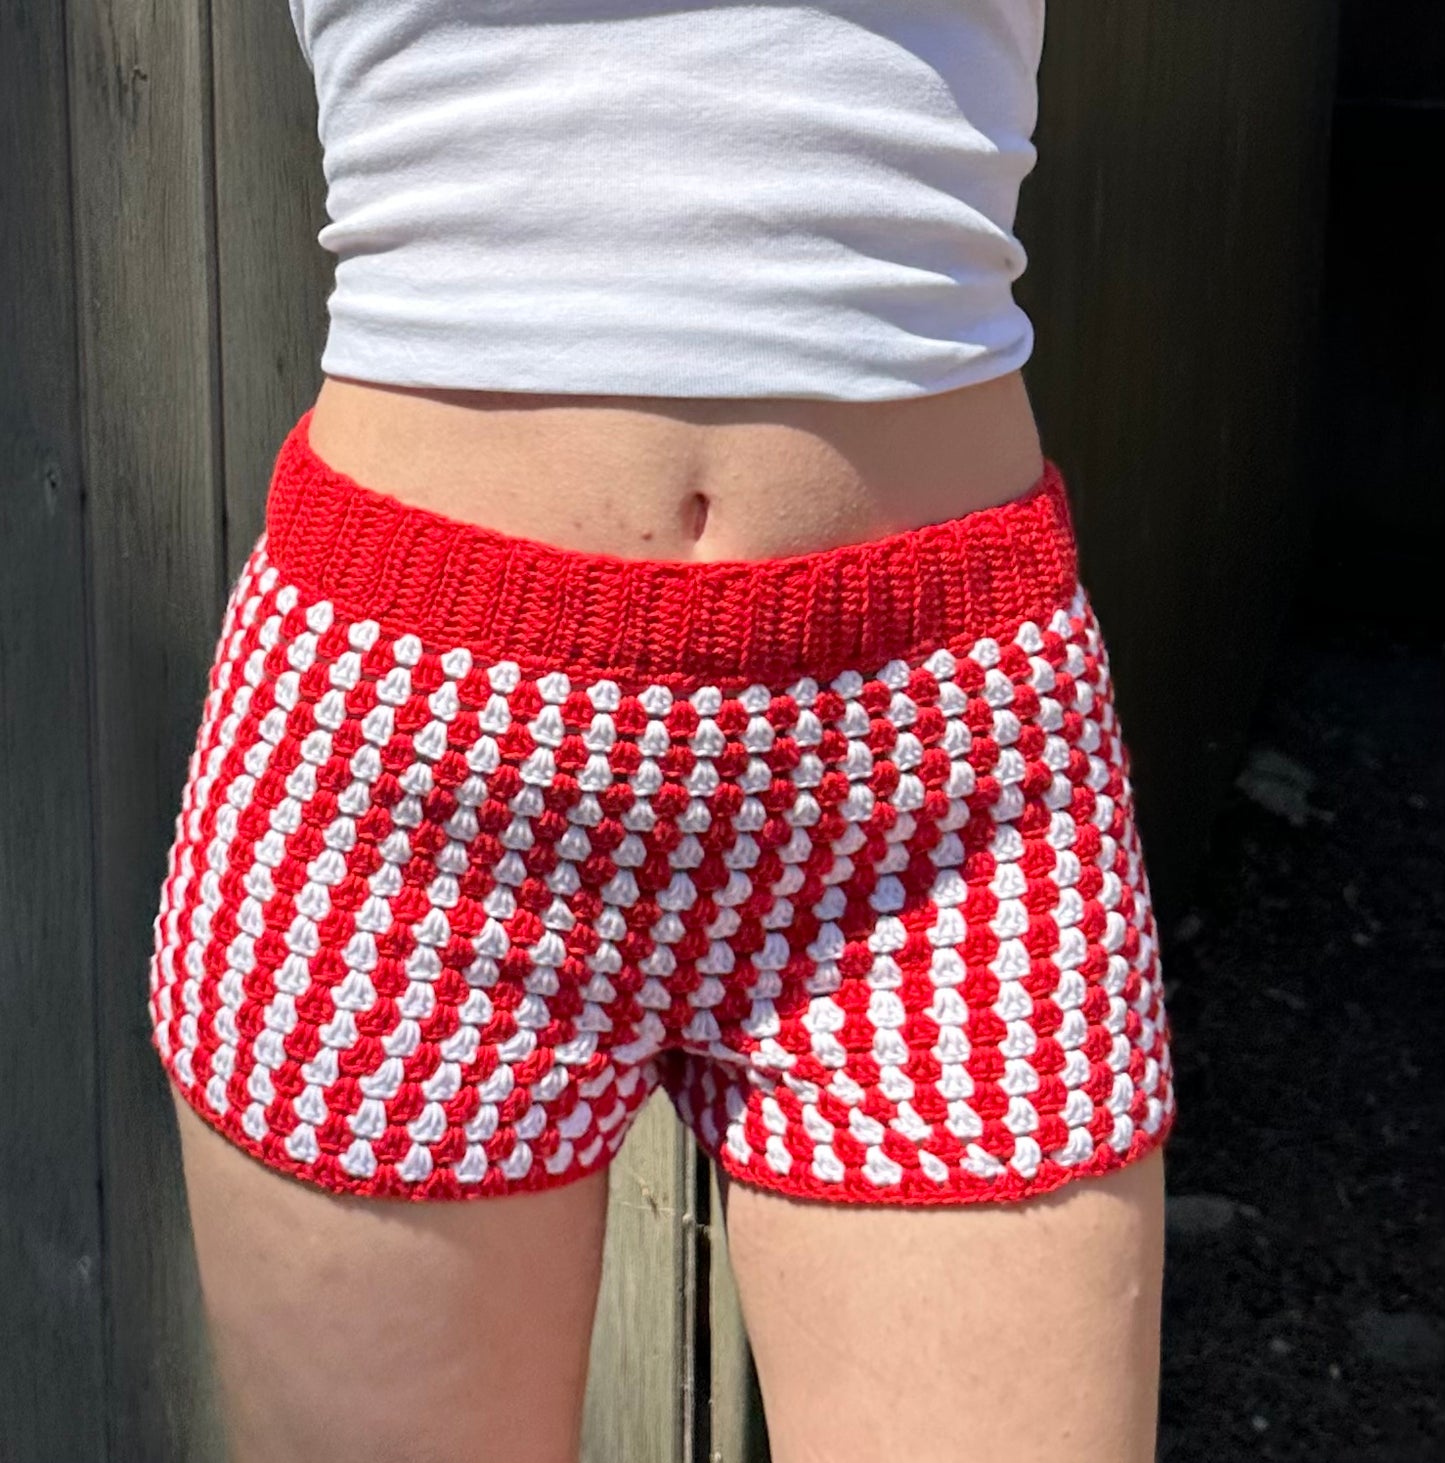 Handmade gingham crochet shorts in red and white